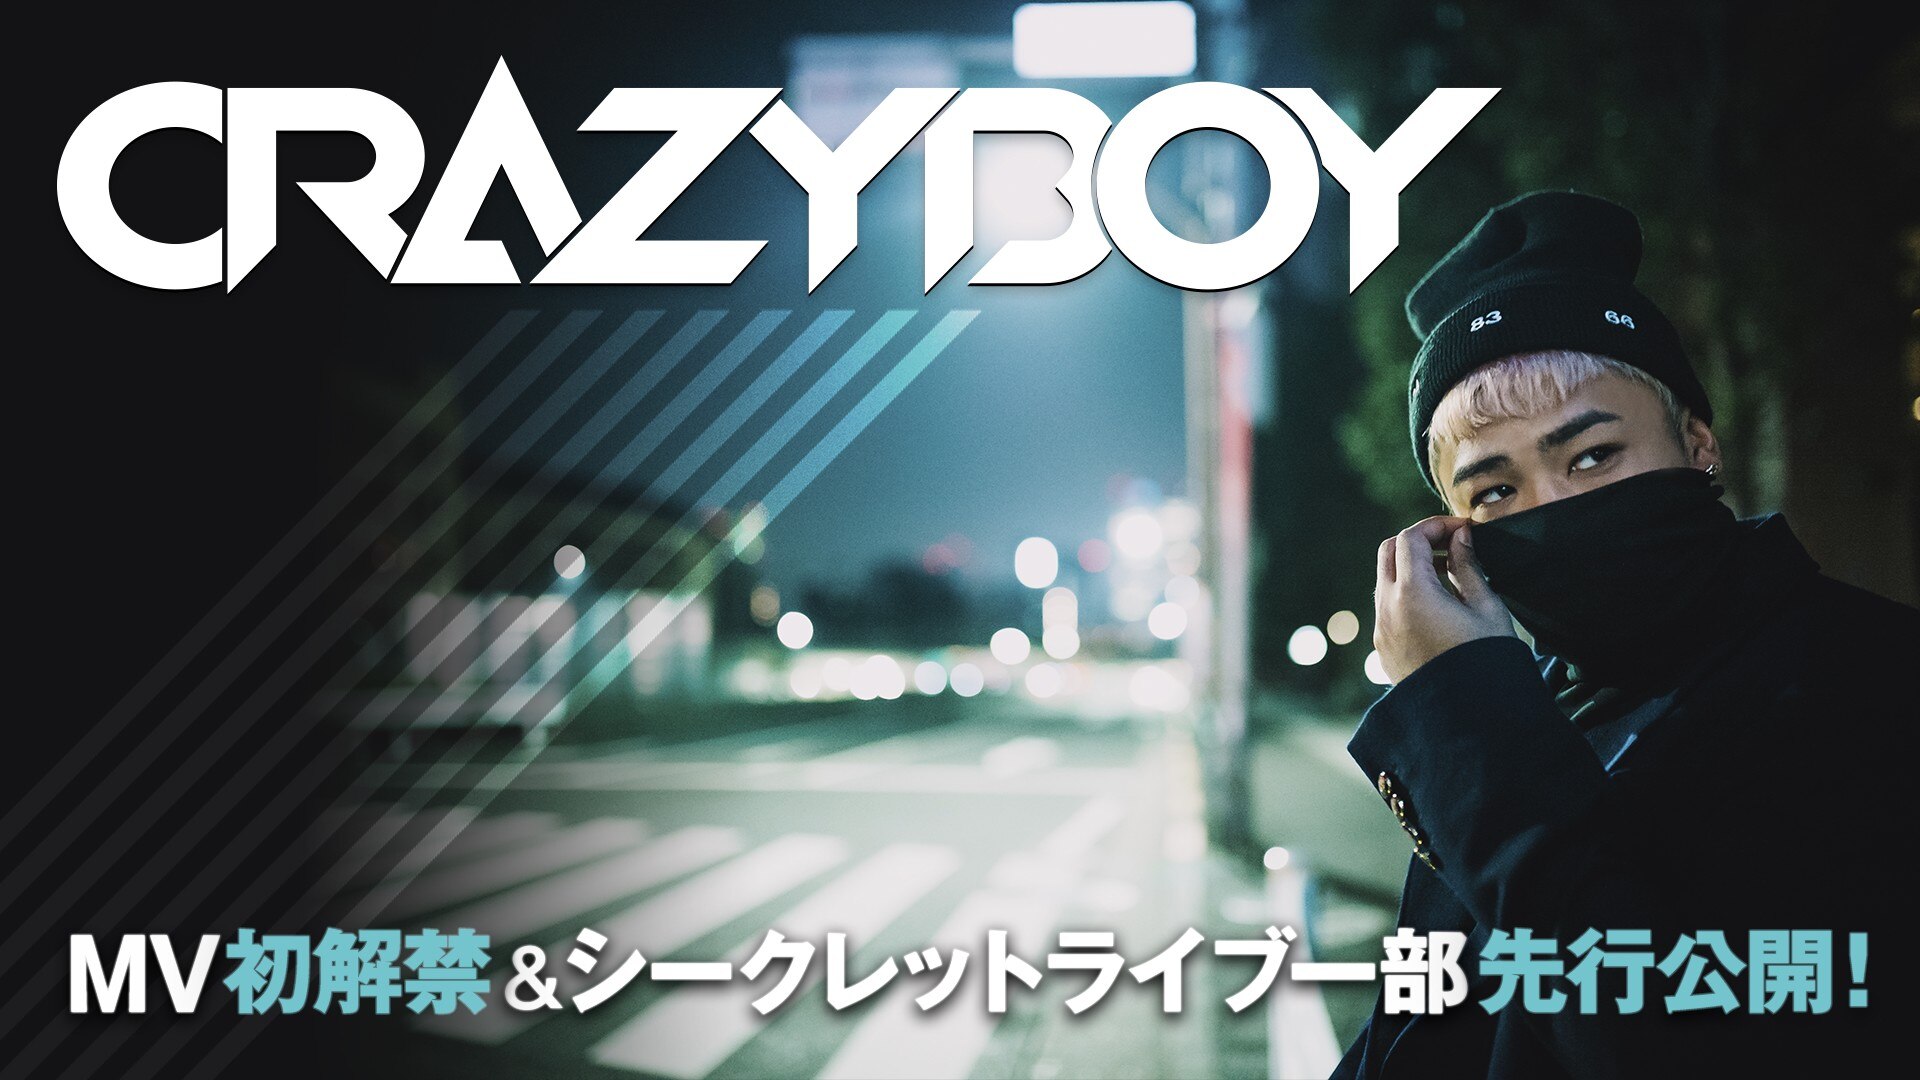 News Crazyboy Official Website